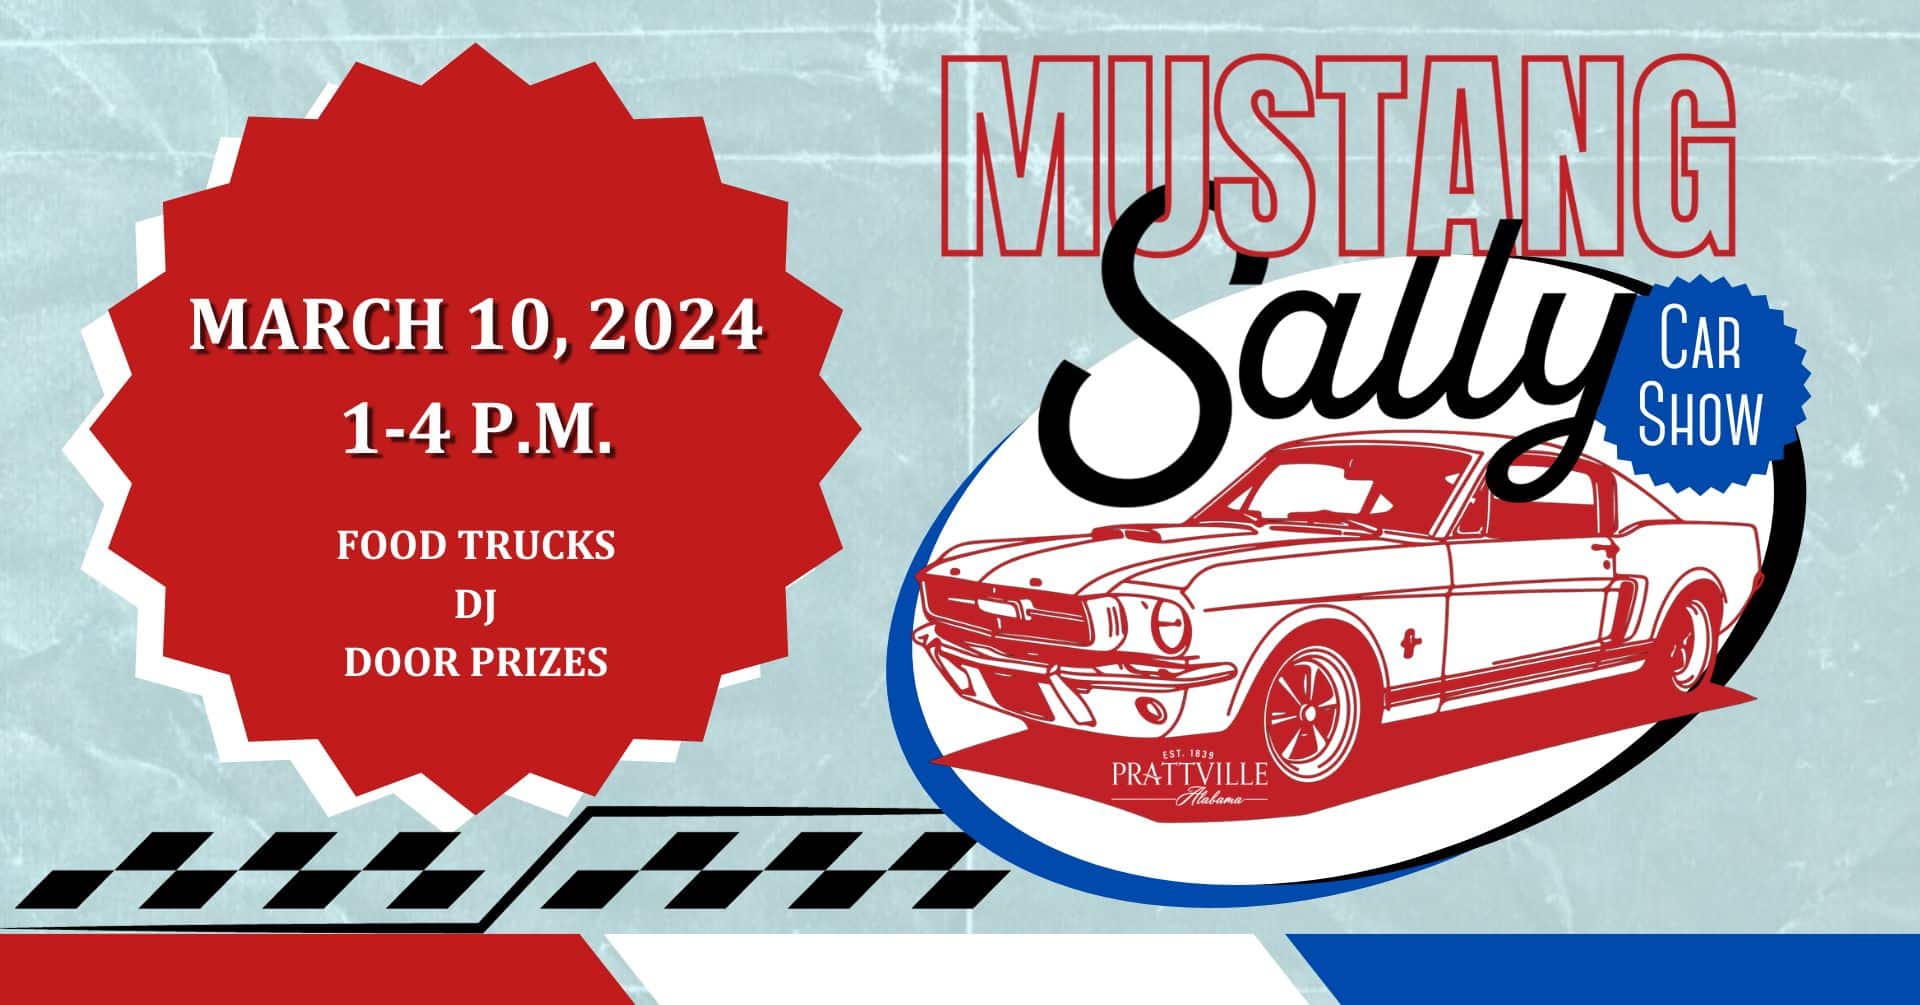 Mustang Sally Car Show